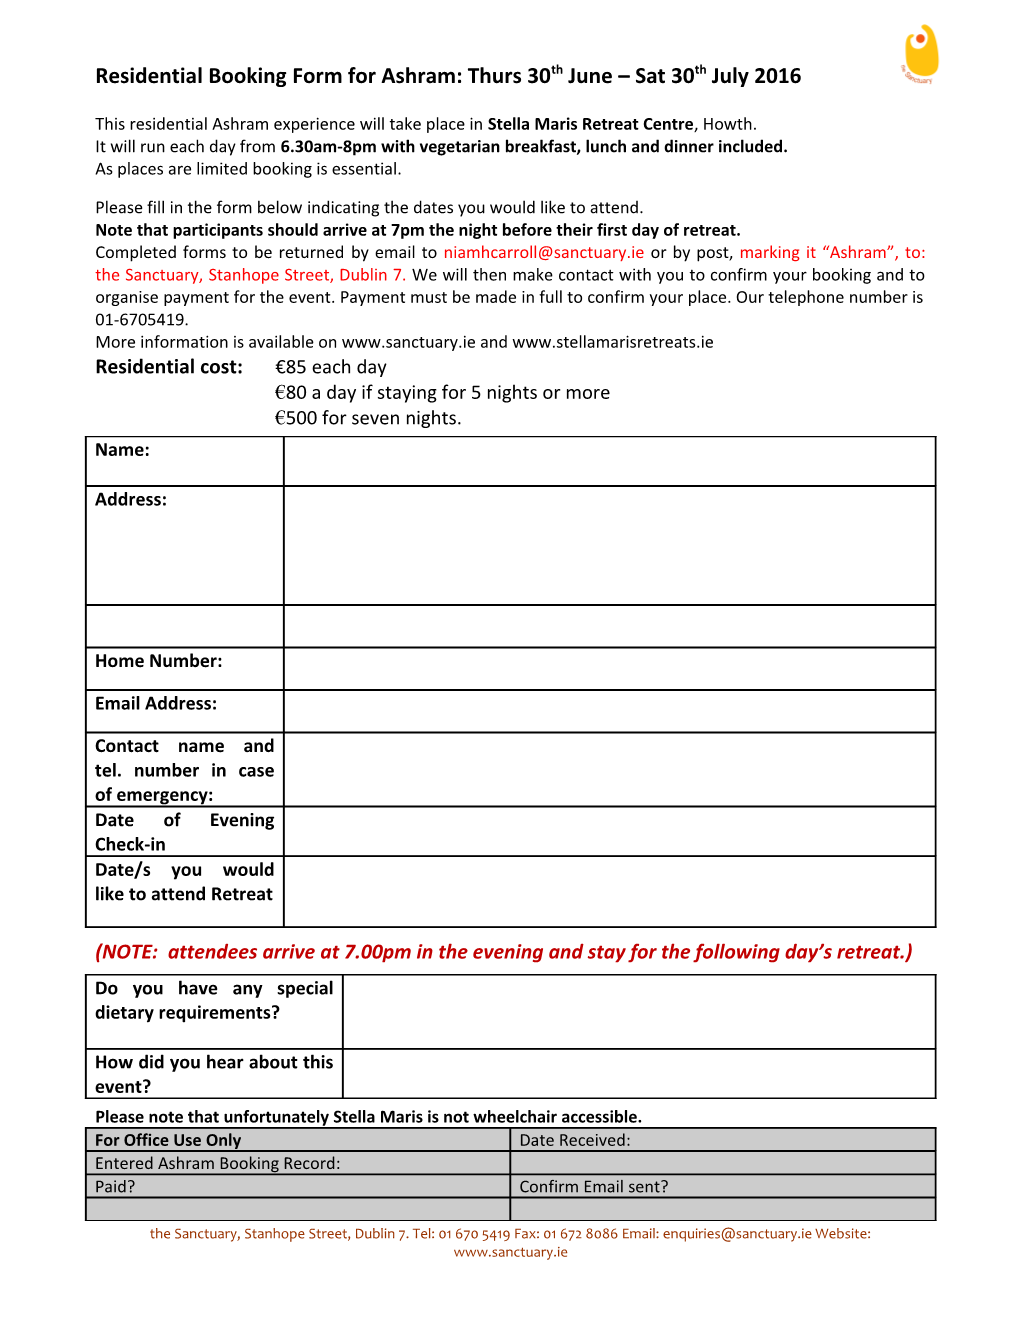 Booking Form for Ashram: 27Th August 21St September 2012